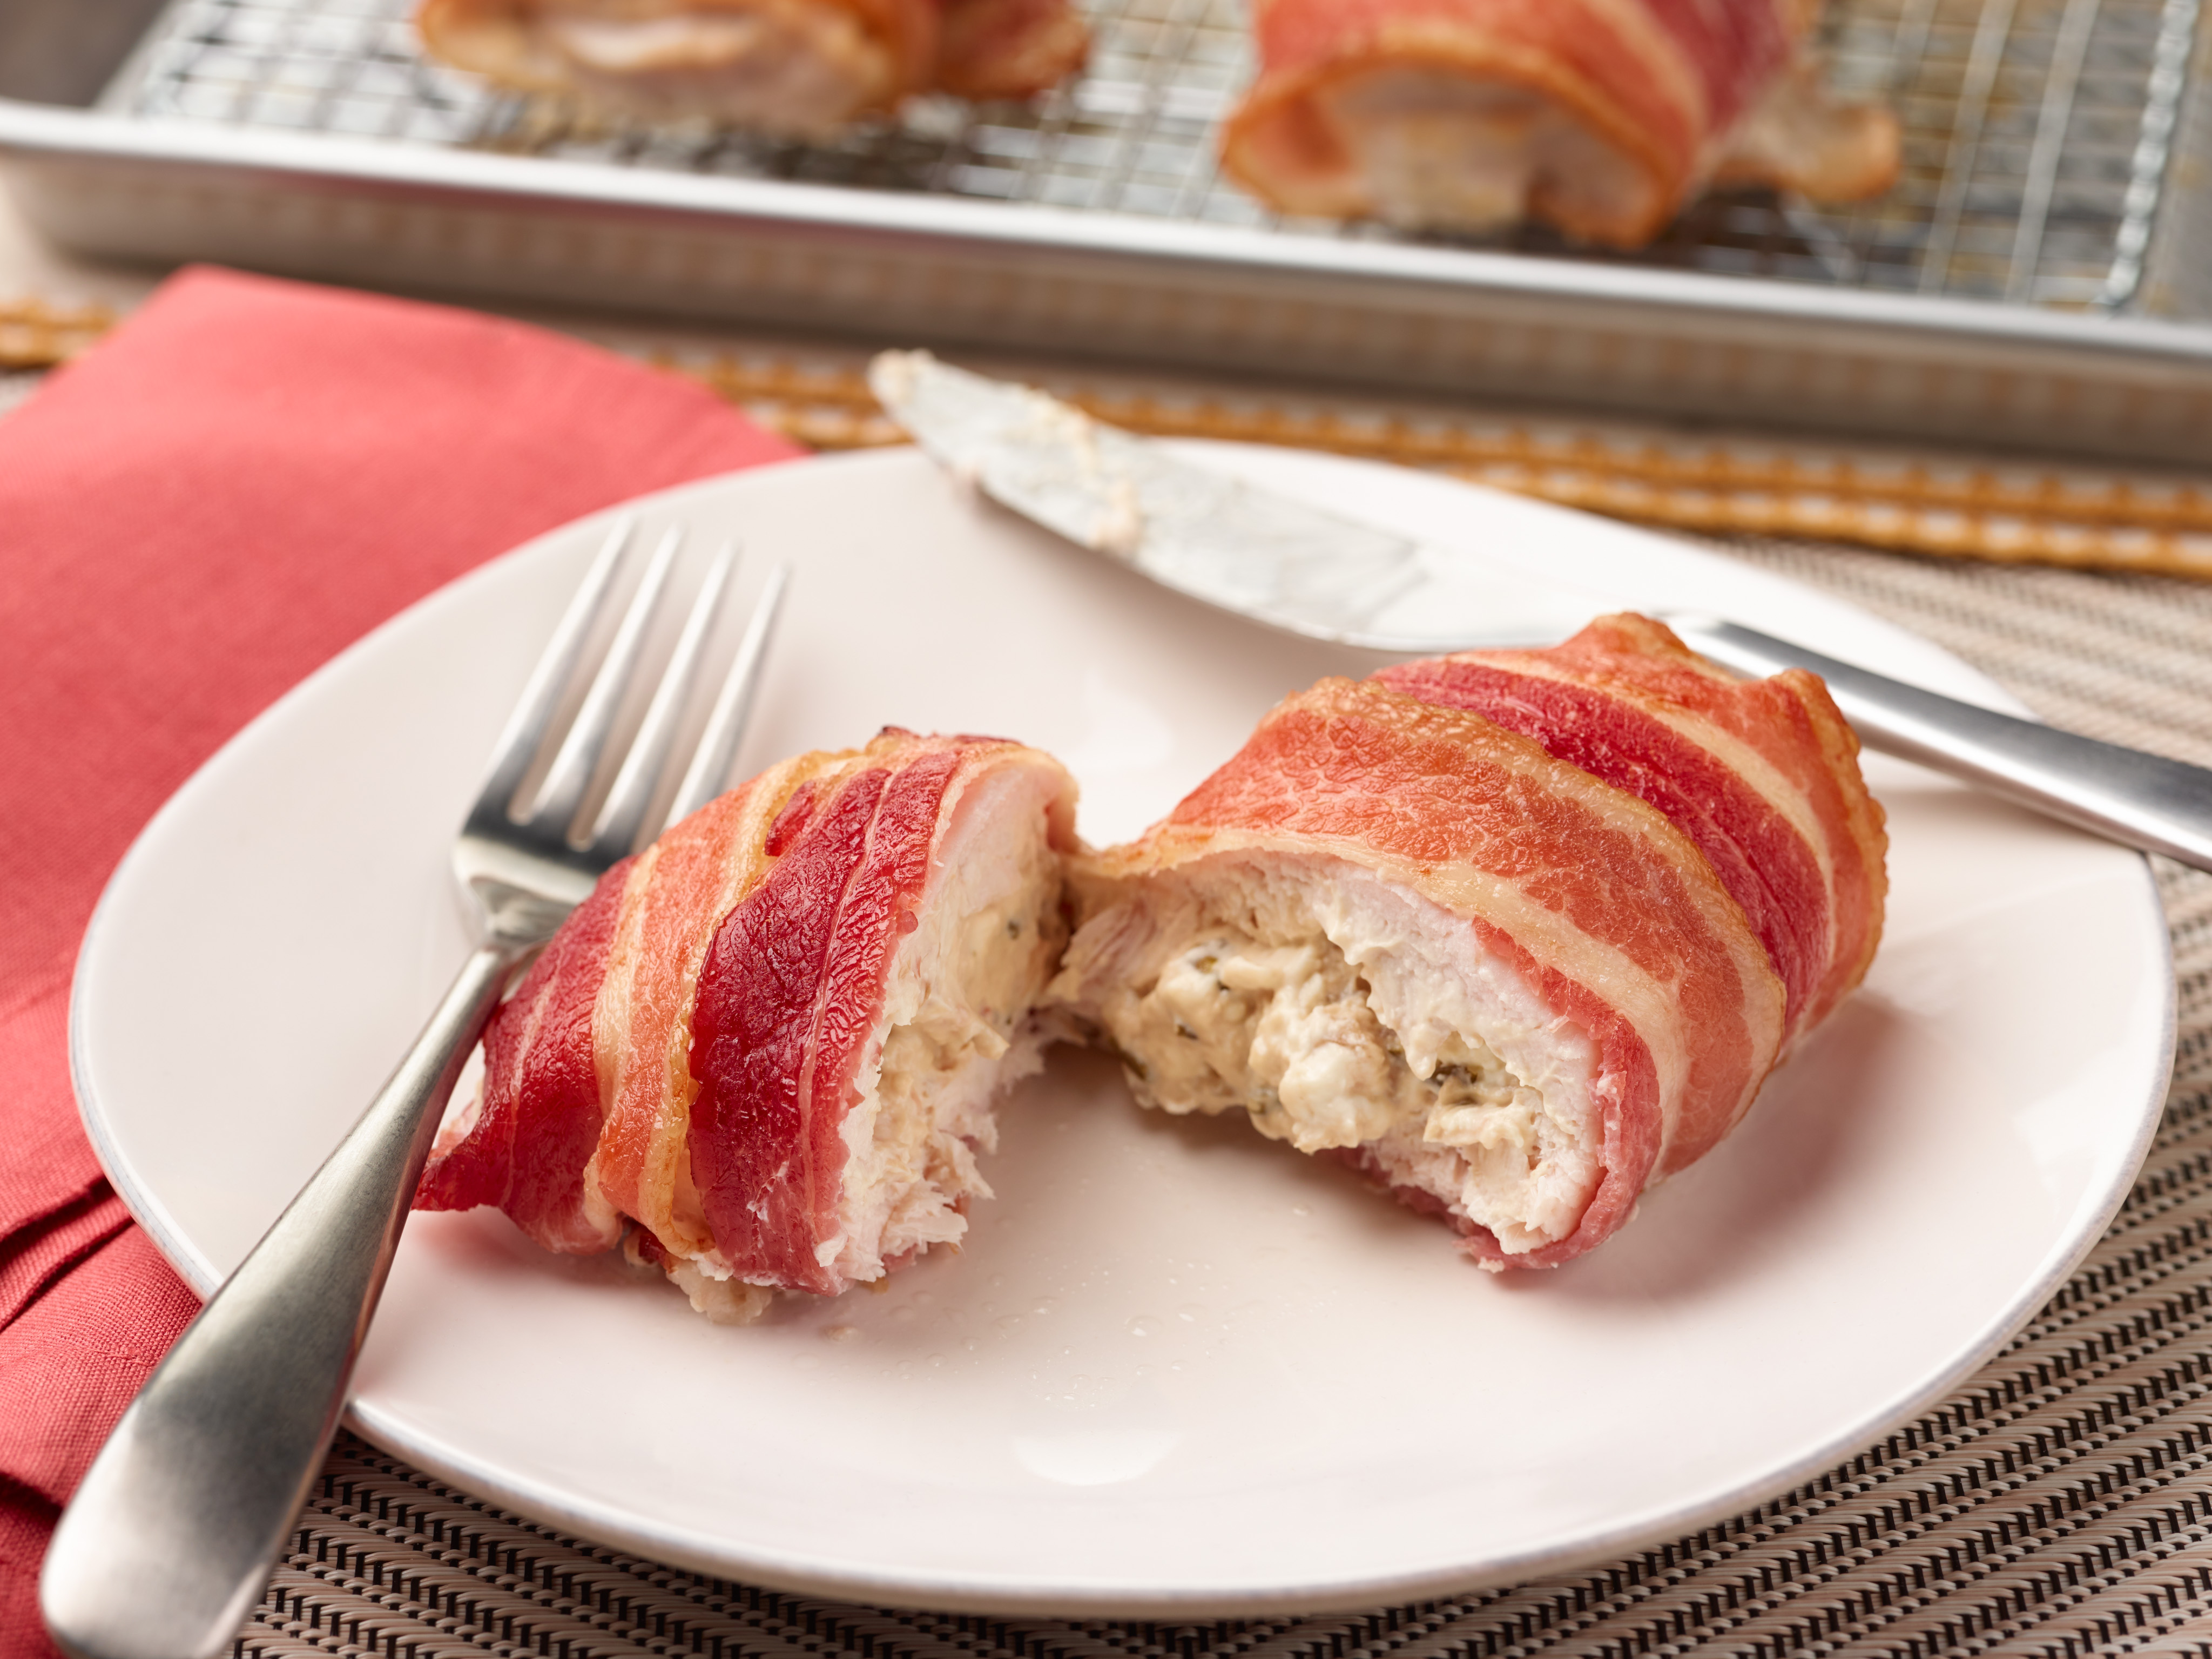 stuffed chicken breast wrapped in bacon